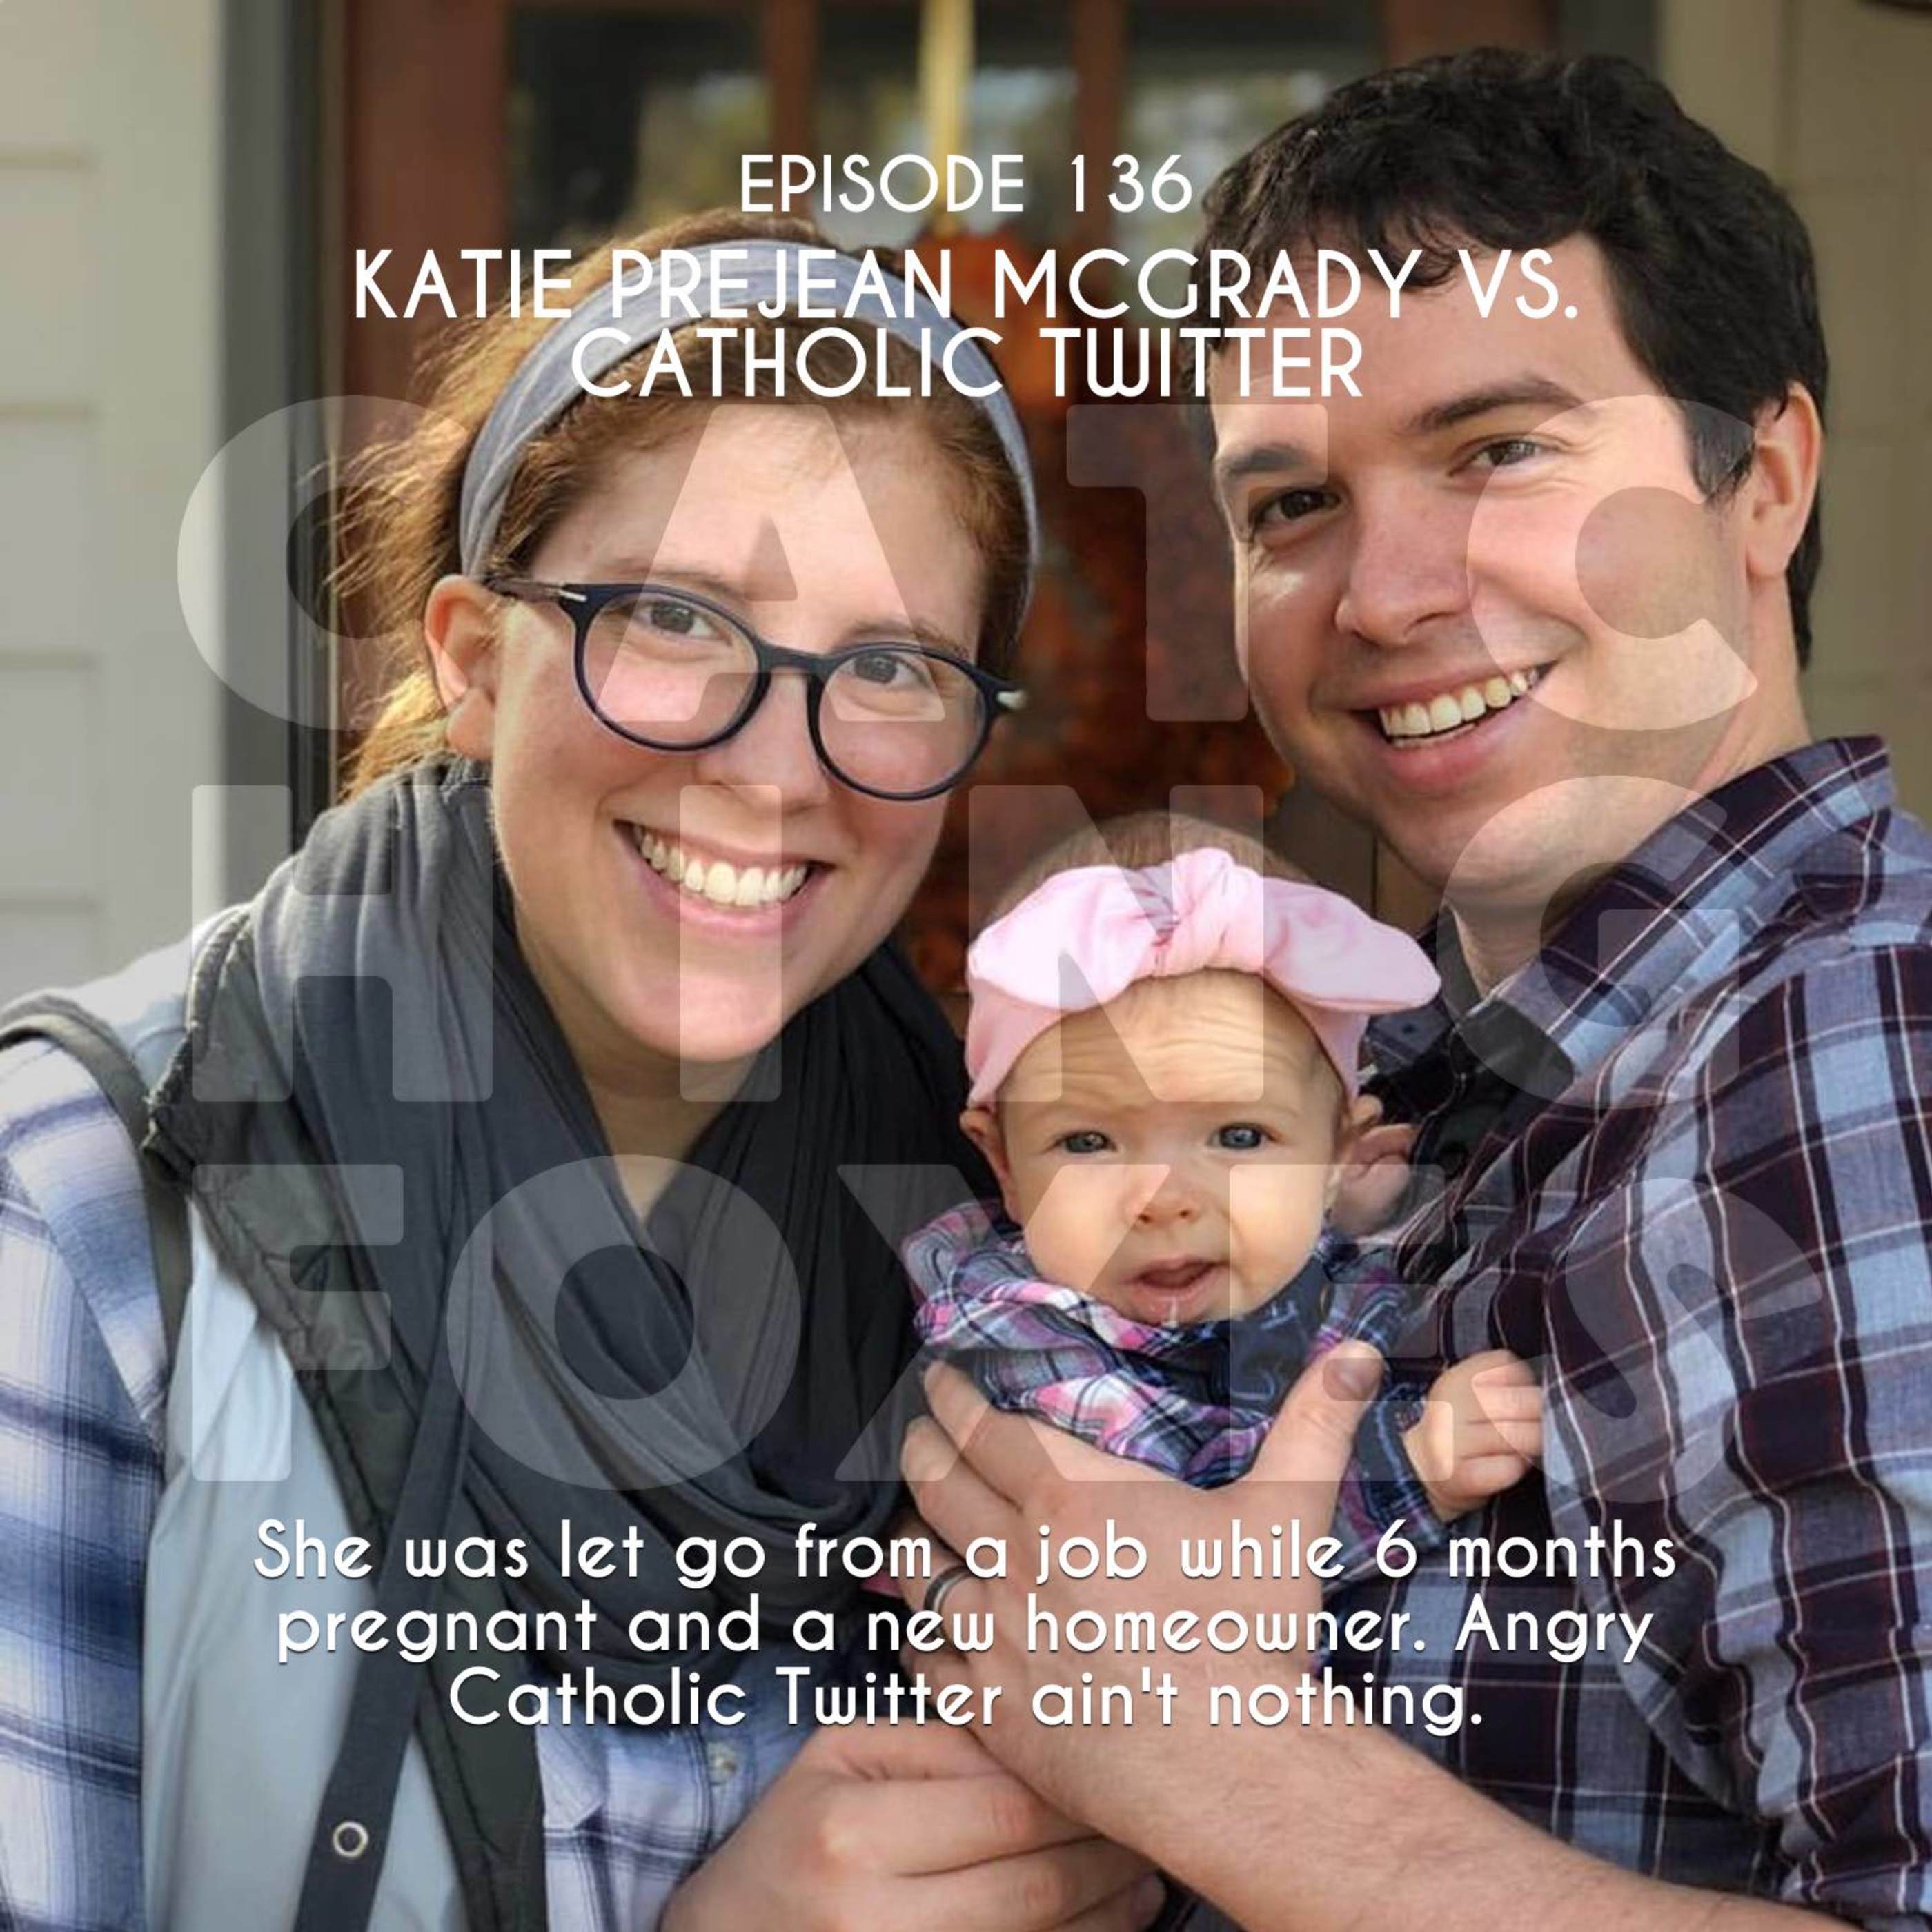 Katie Prejean McGrady vs Catholic Twitter